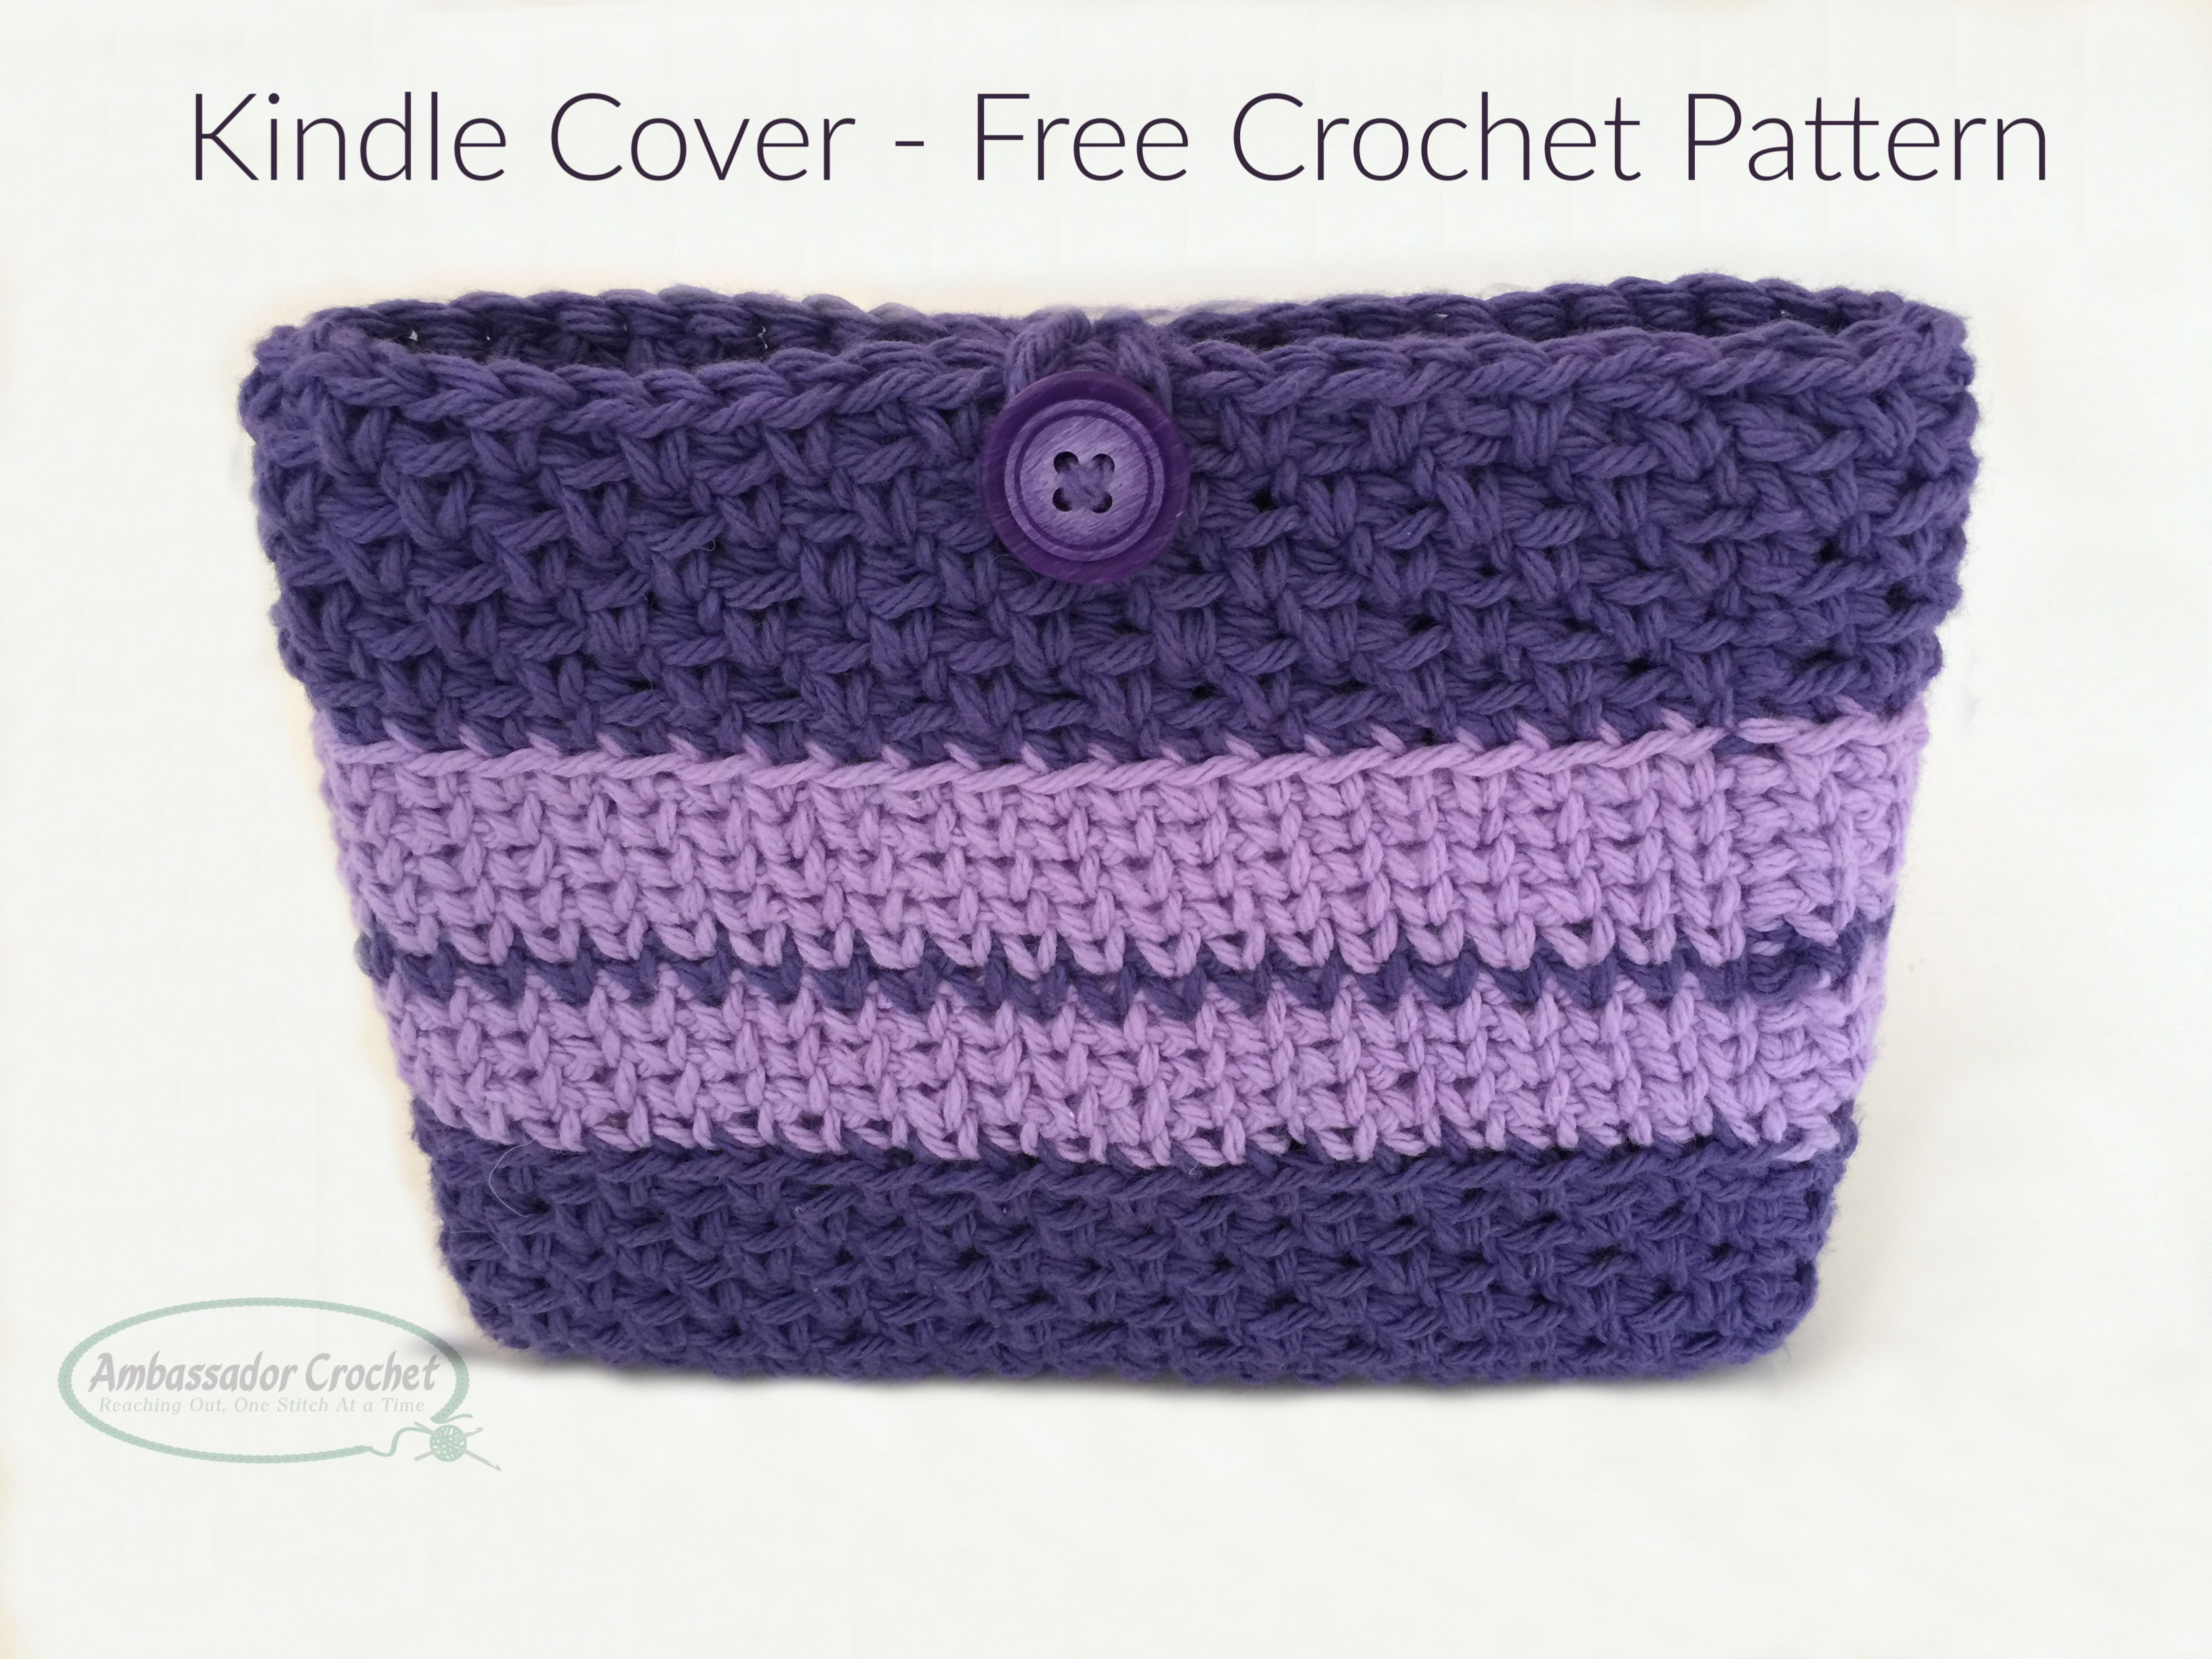 Kindle Cover Free Crochet Pattern - Ambassador Crochet